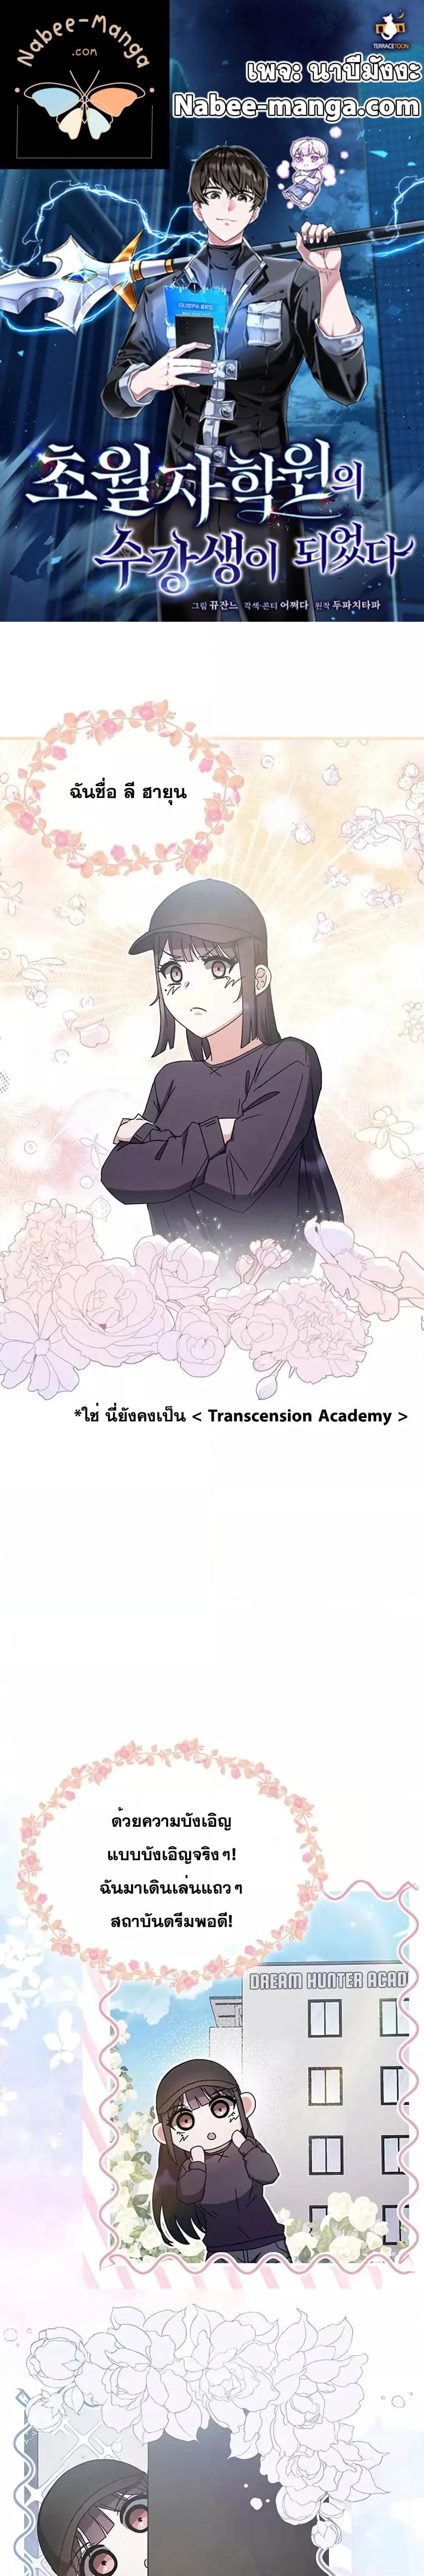 Transcension Academy 78 01